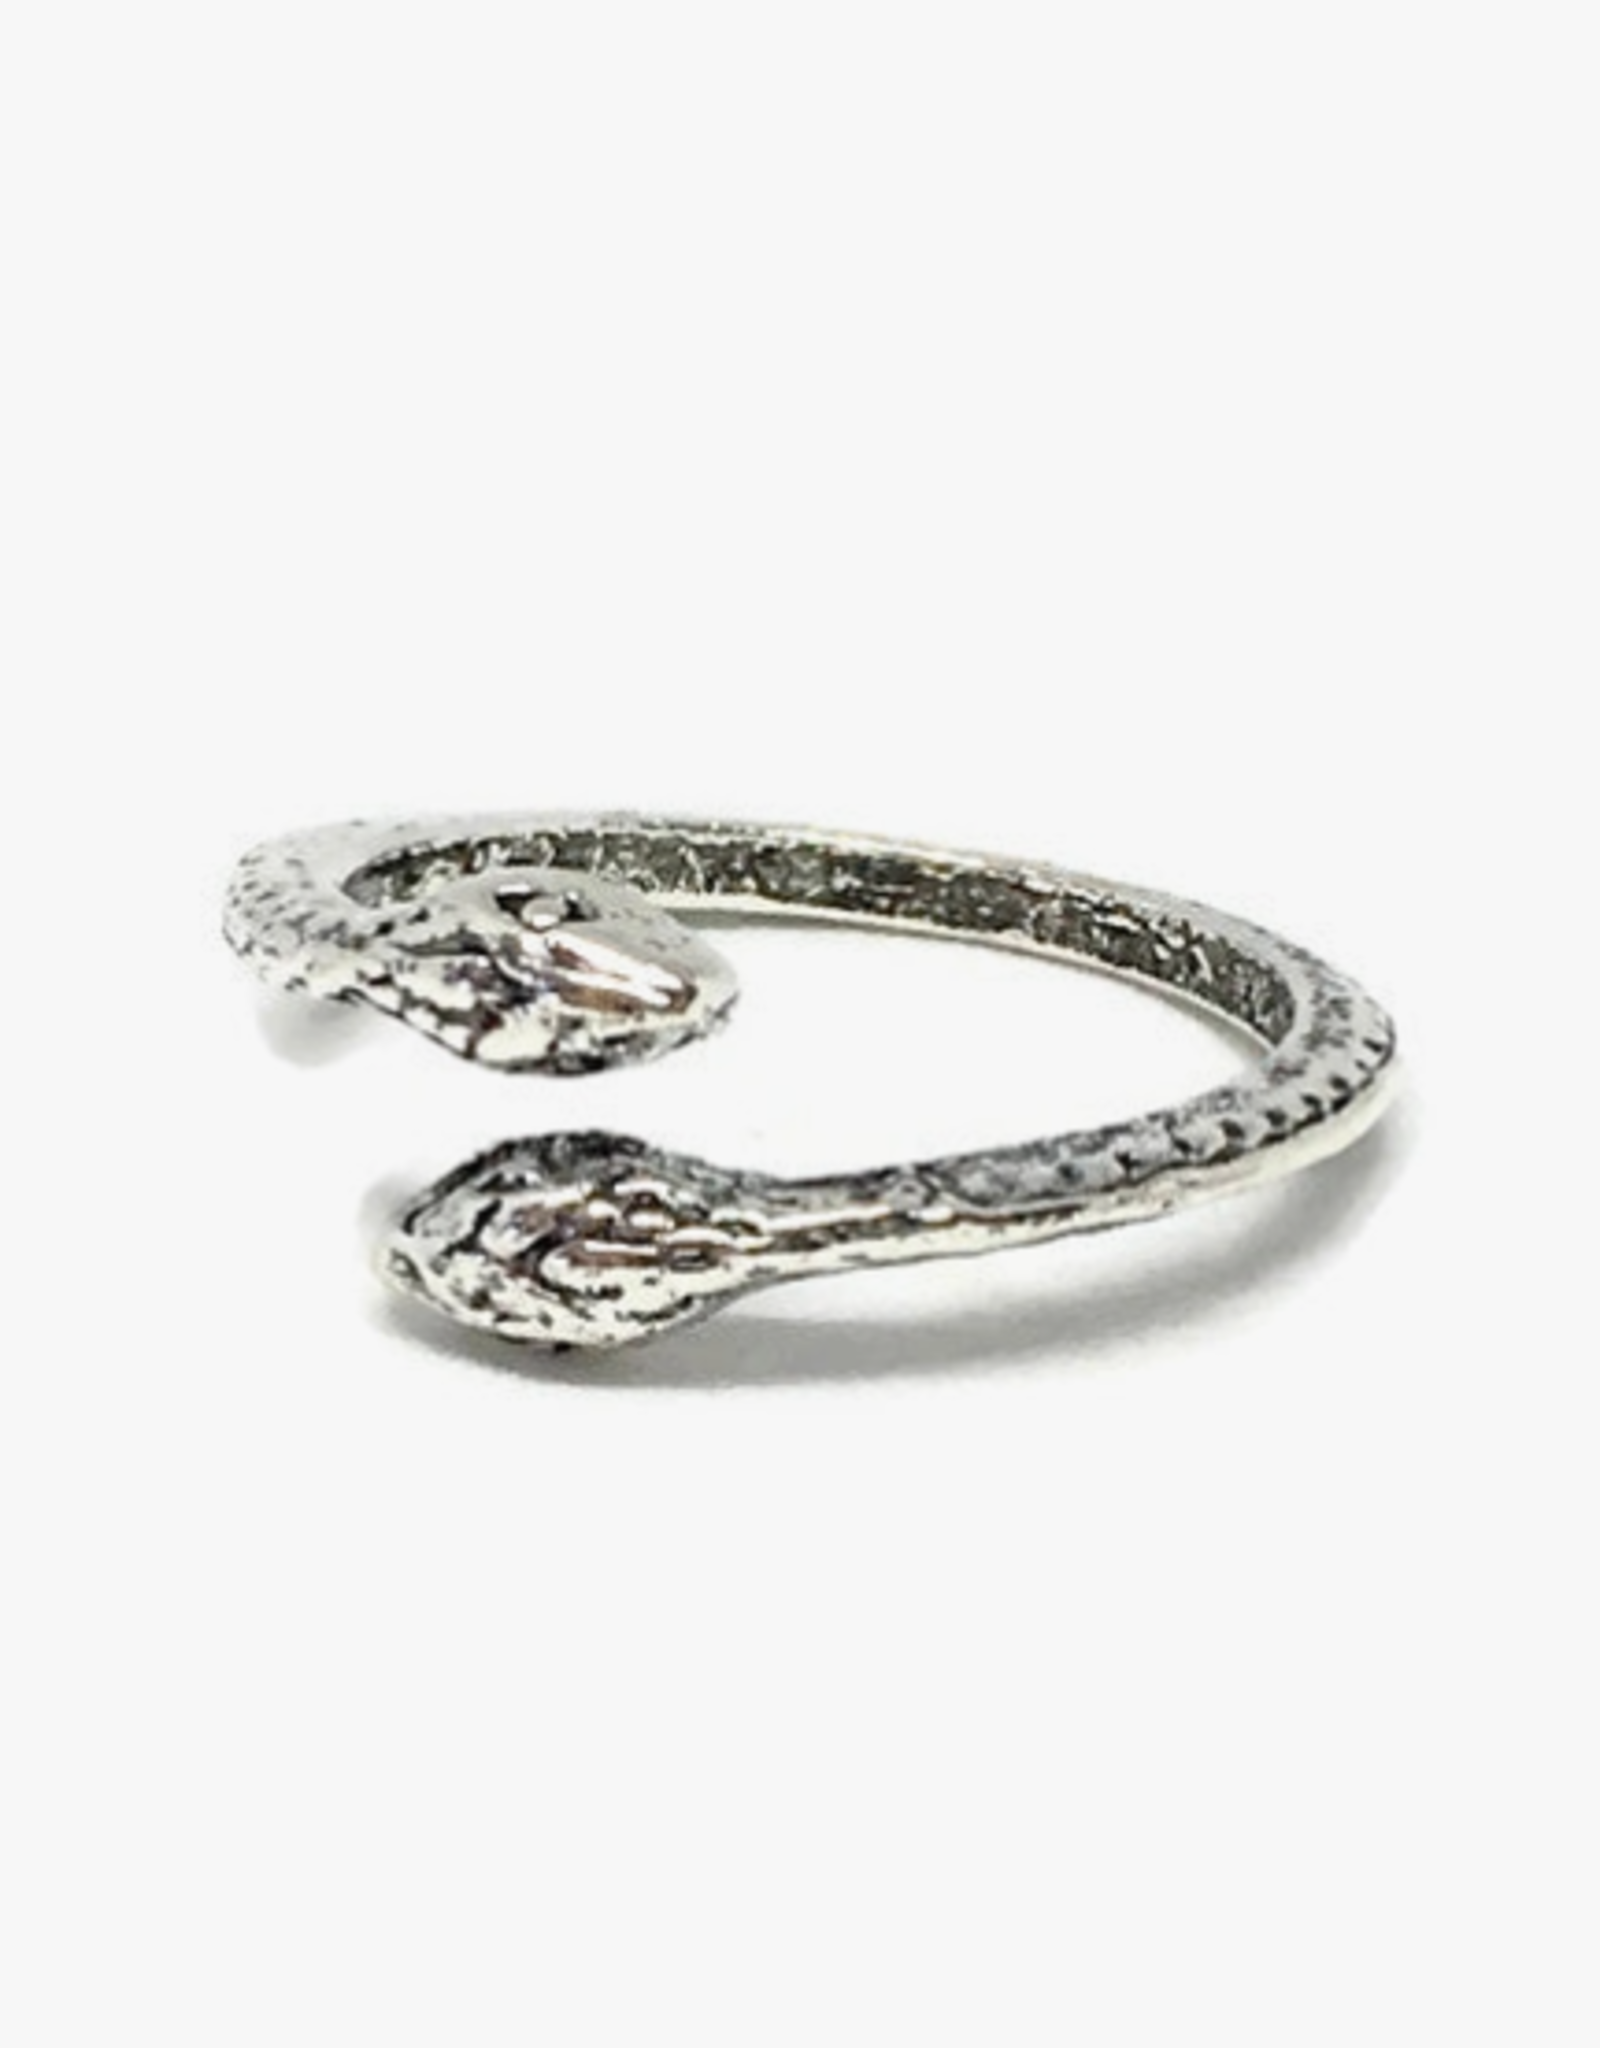 Black Mamba Snake Ring - Silver